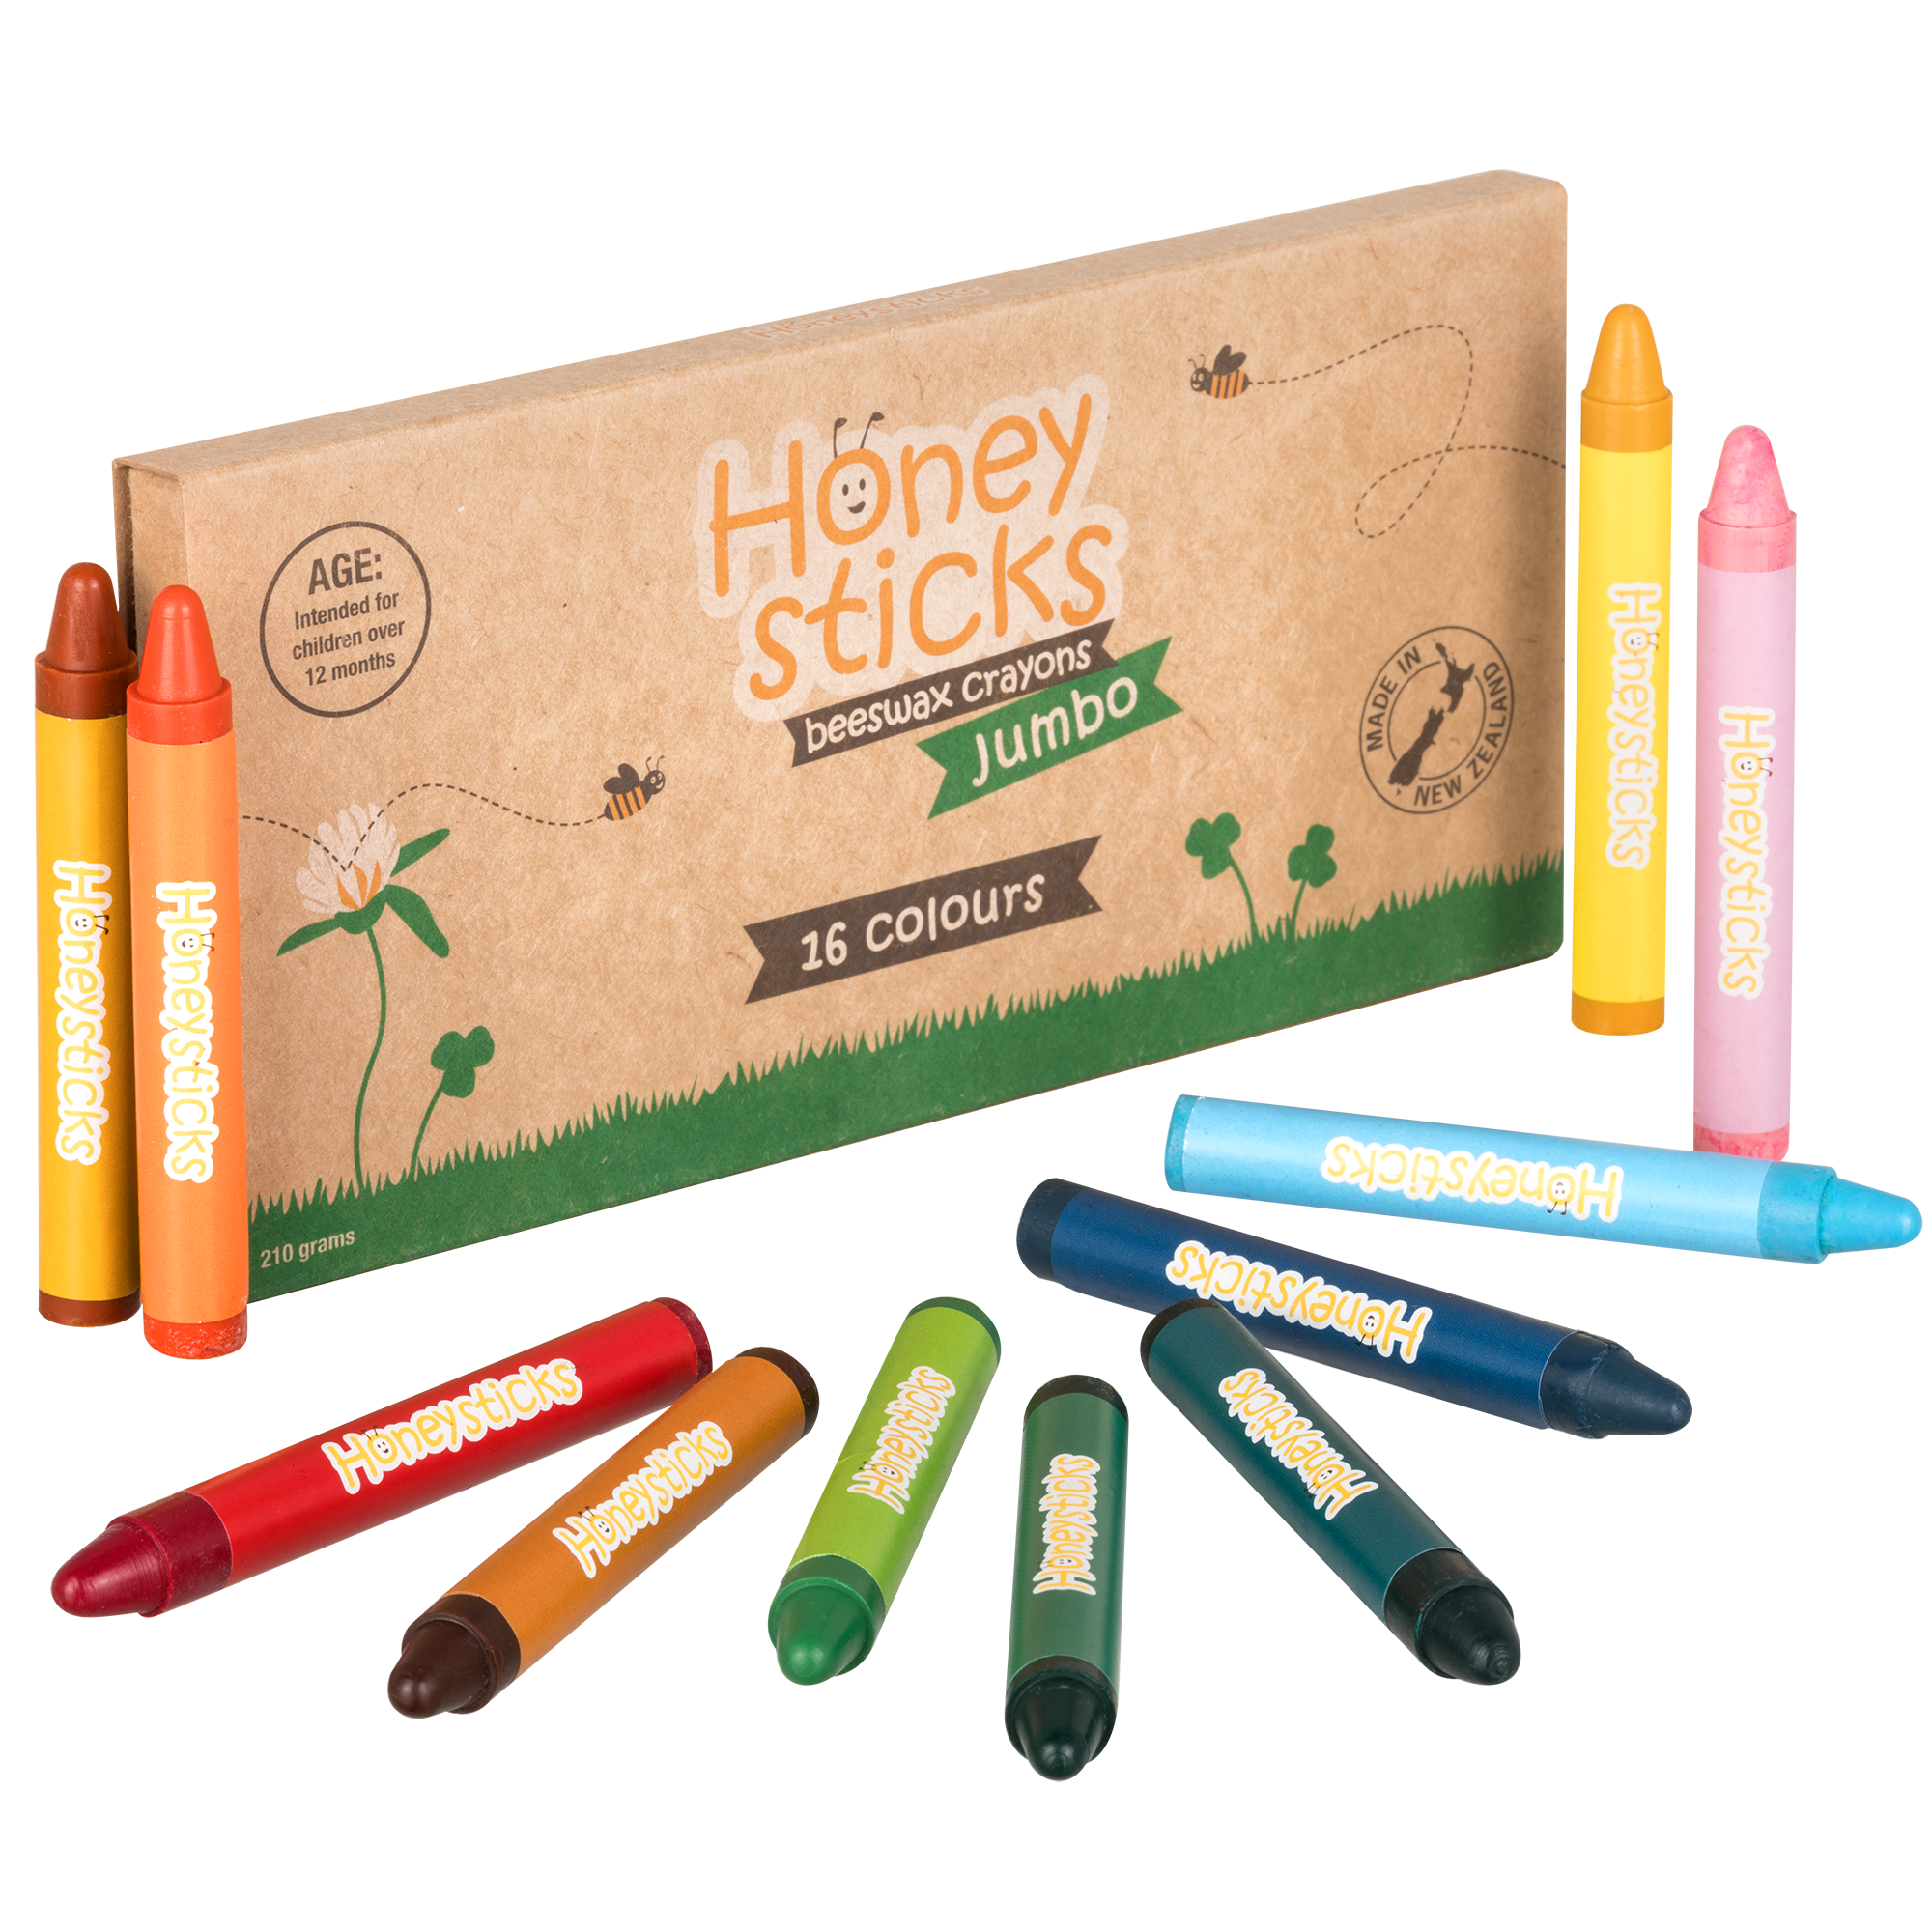 Honeysticks Originals 100% Pure Beeswax Crayons by Honeysticks Creative LLC